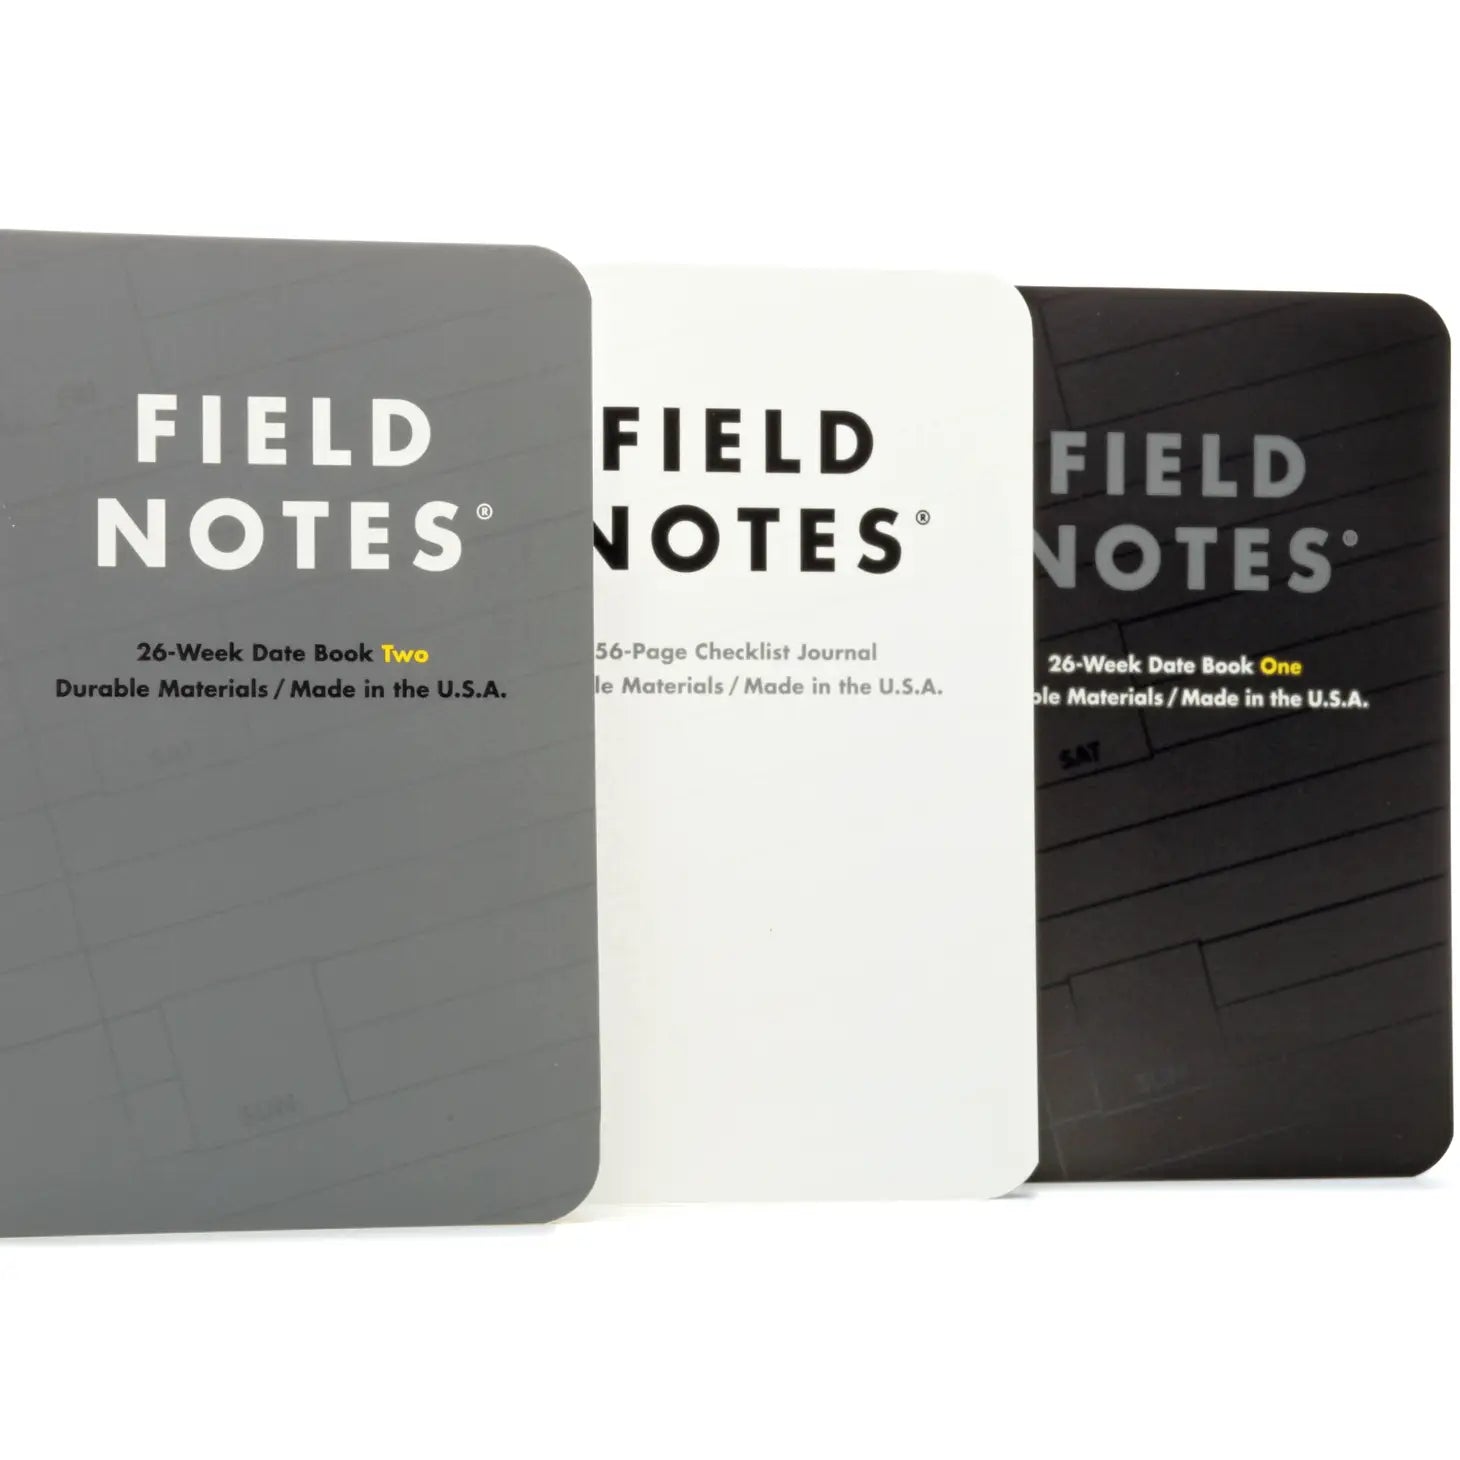 Field Notes Pocket Notebook Set - Ignition Trilogy